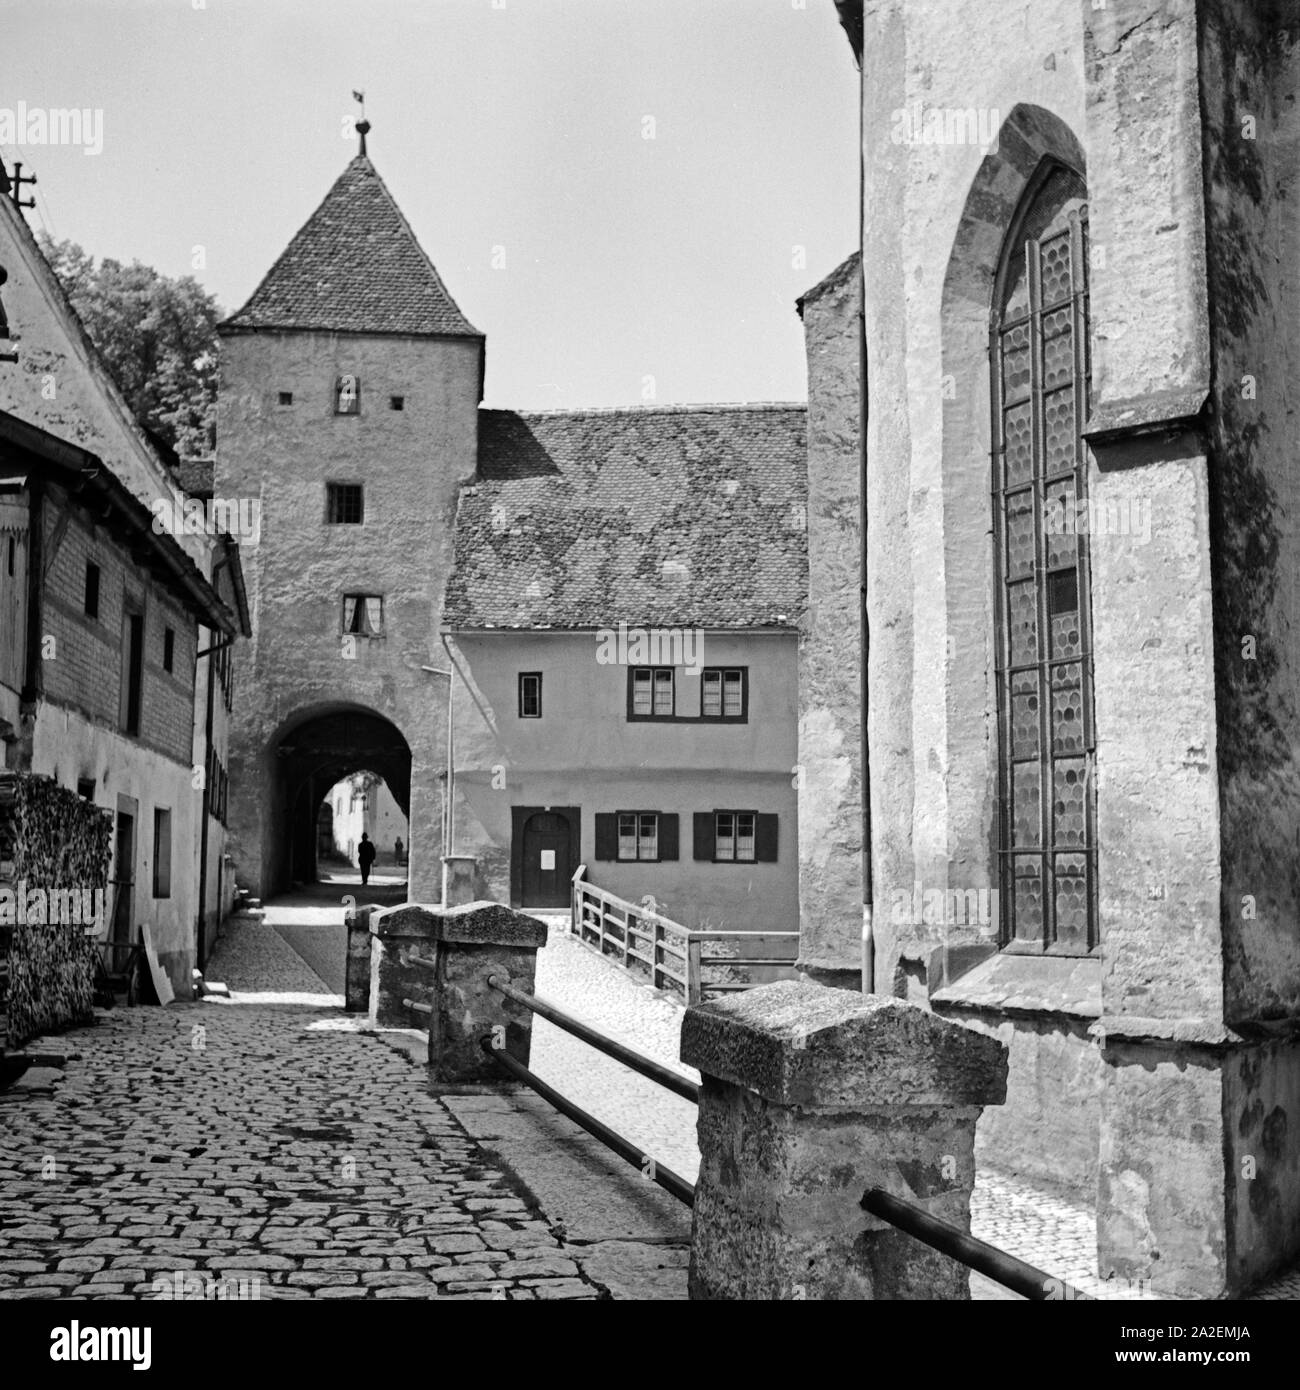 Stadtturmund Altstadt von Pappenheim im Altmühltal, Deutschland 1930 er Jahre. Ancienne porte de la ville et des bâtiments à Pappenheim, Allemagne 1930. Banque D'Images